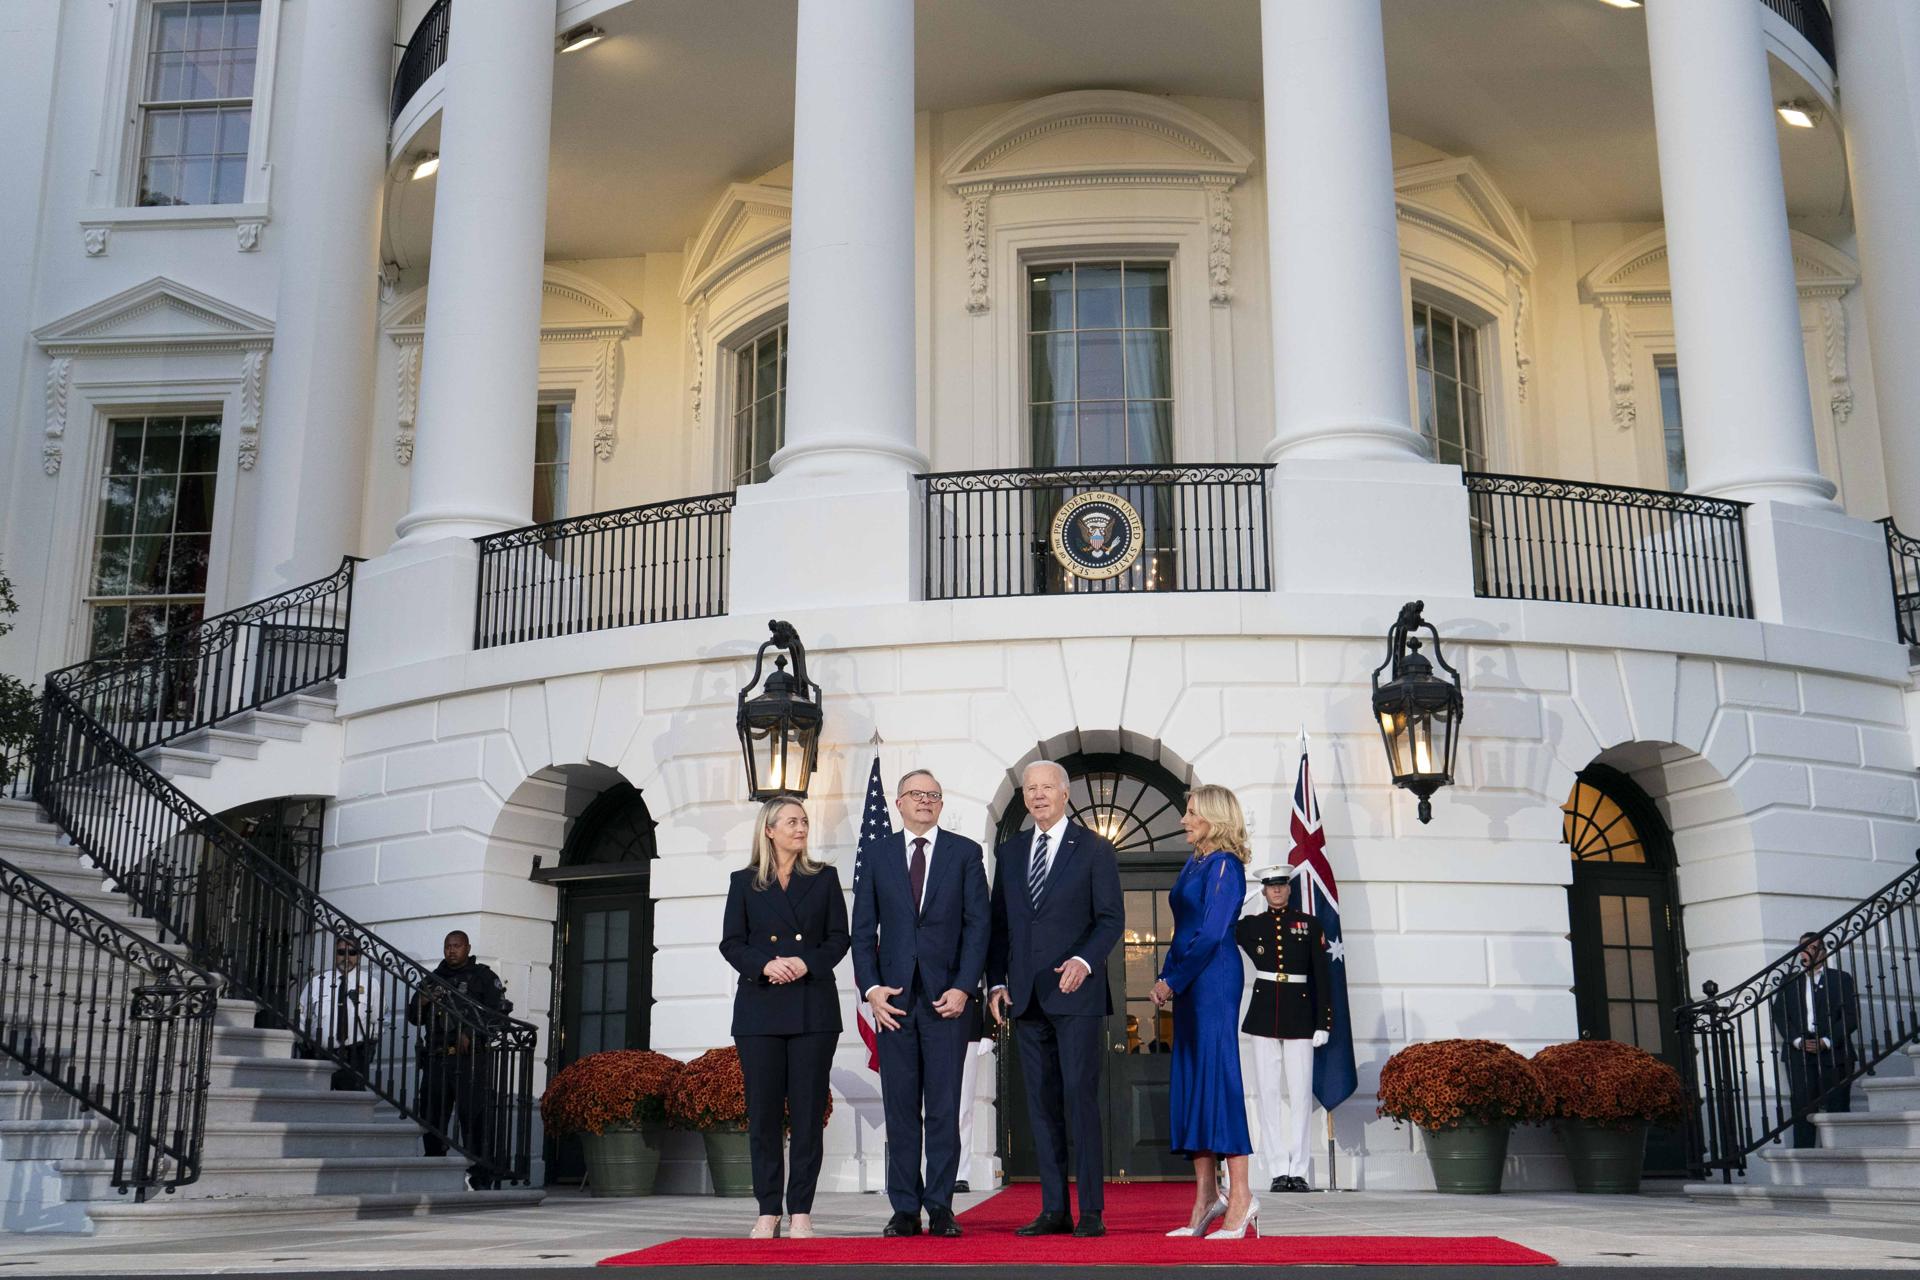 President Biden and first Lady Jill Biden welcomed Australian Prime Minister to White House